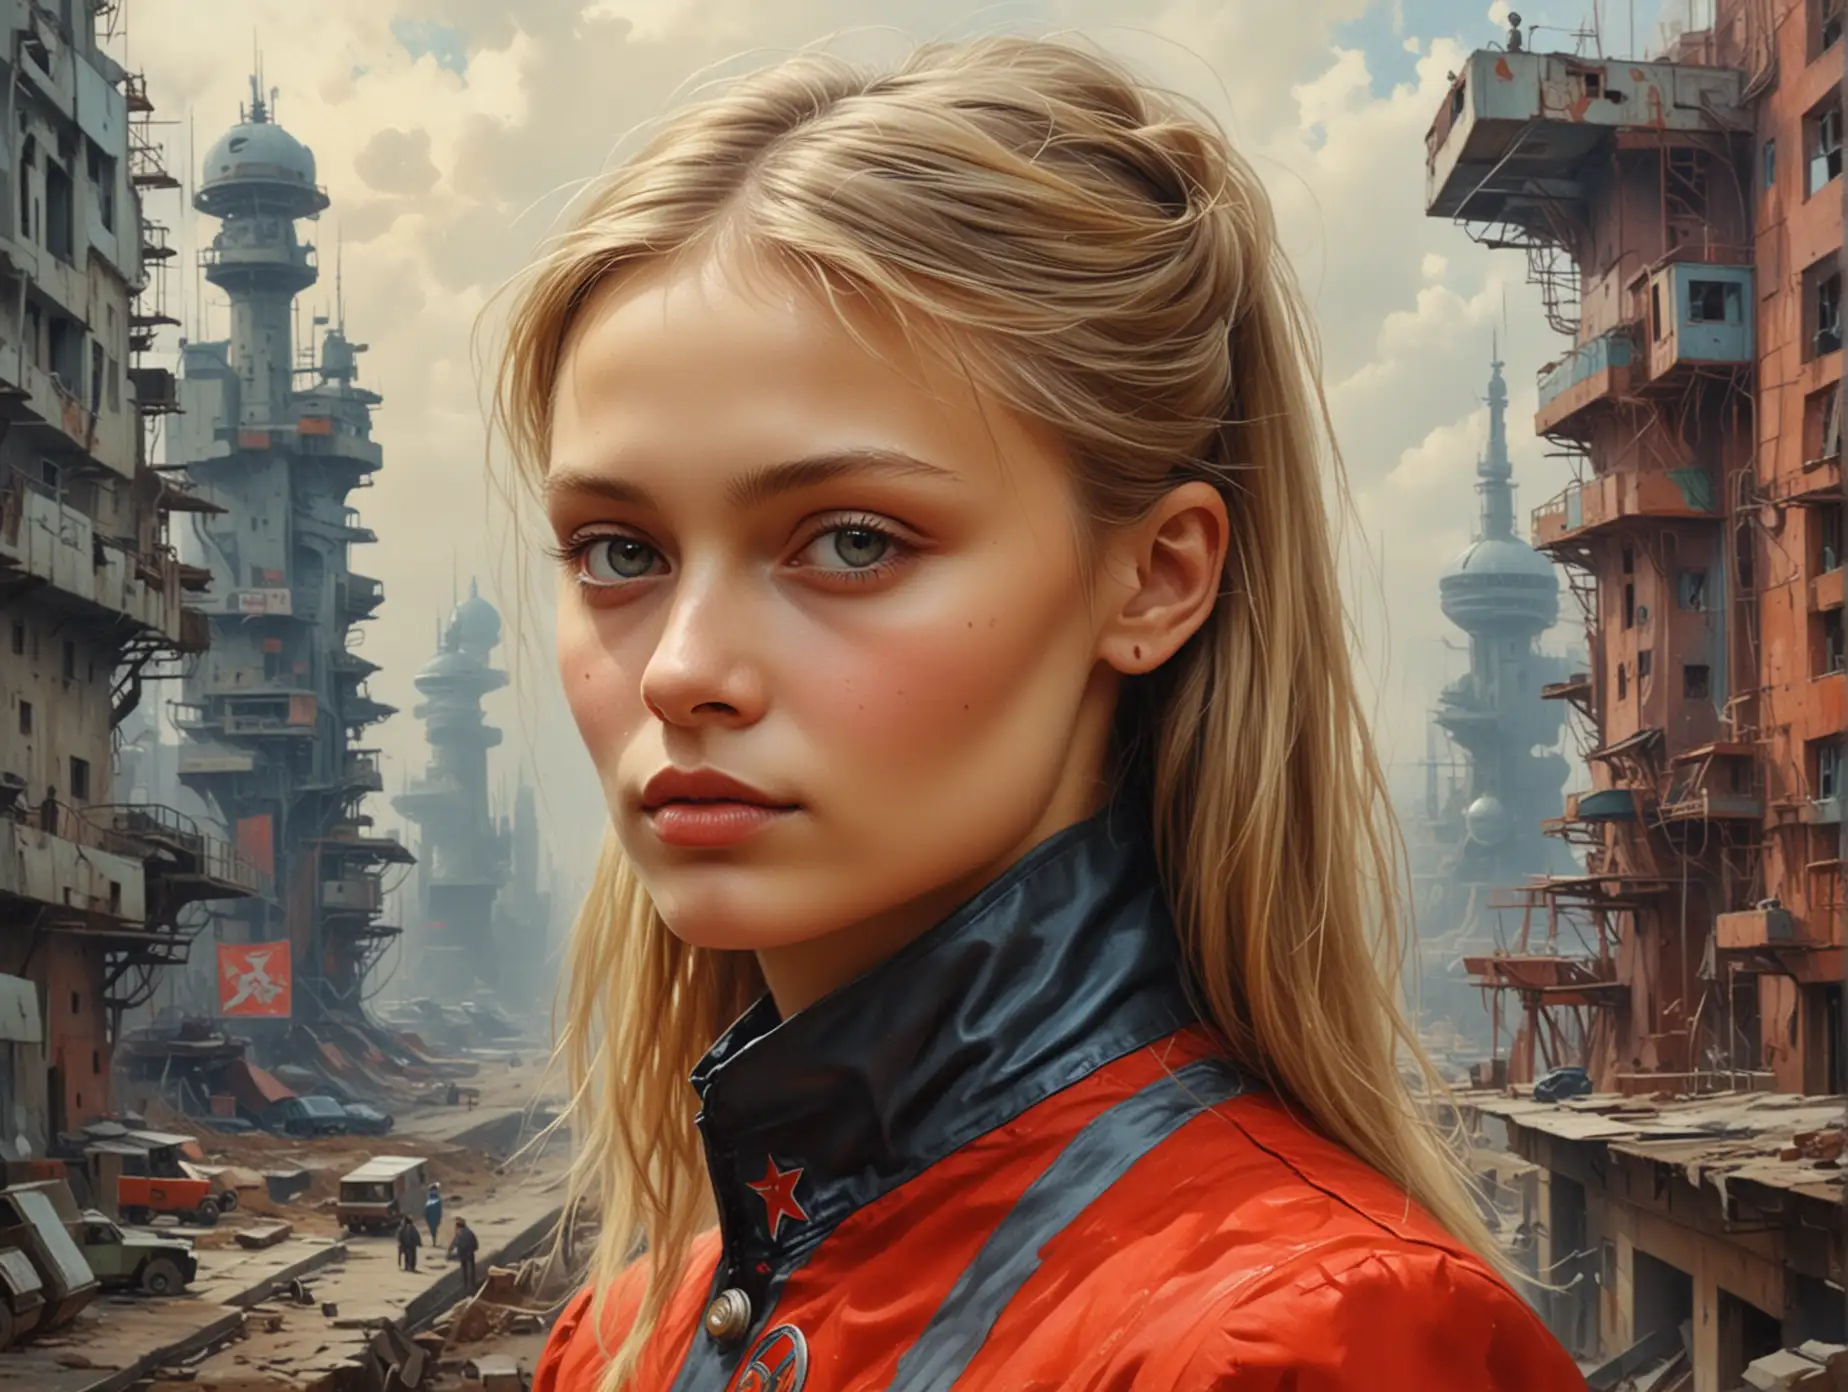 Alice-Selezneva-Girl-USSR-Socialist-Realism-Futurism